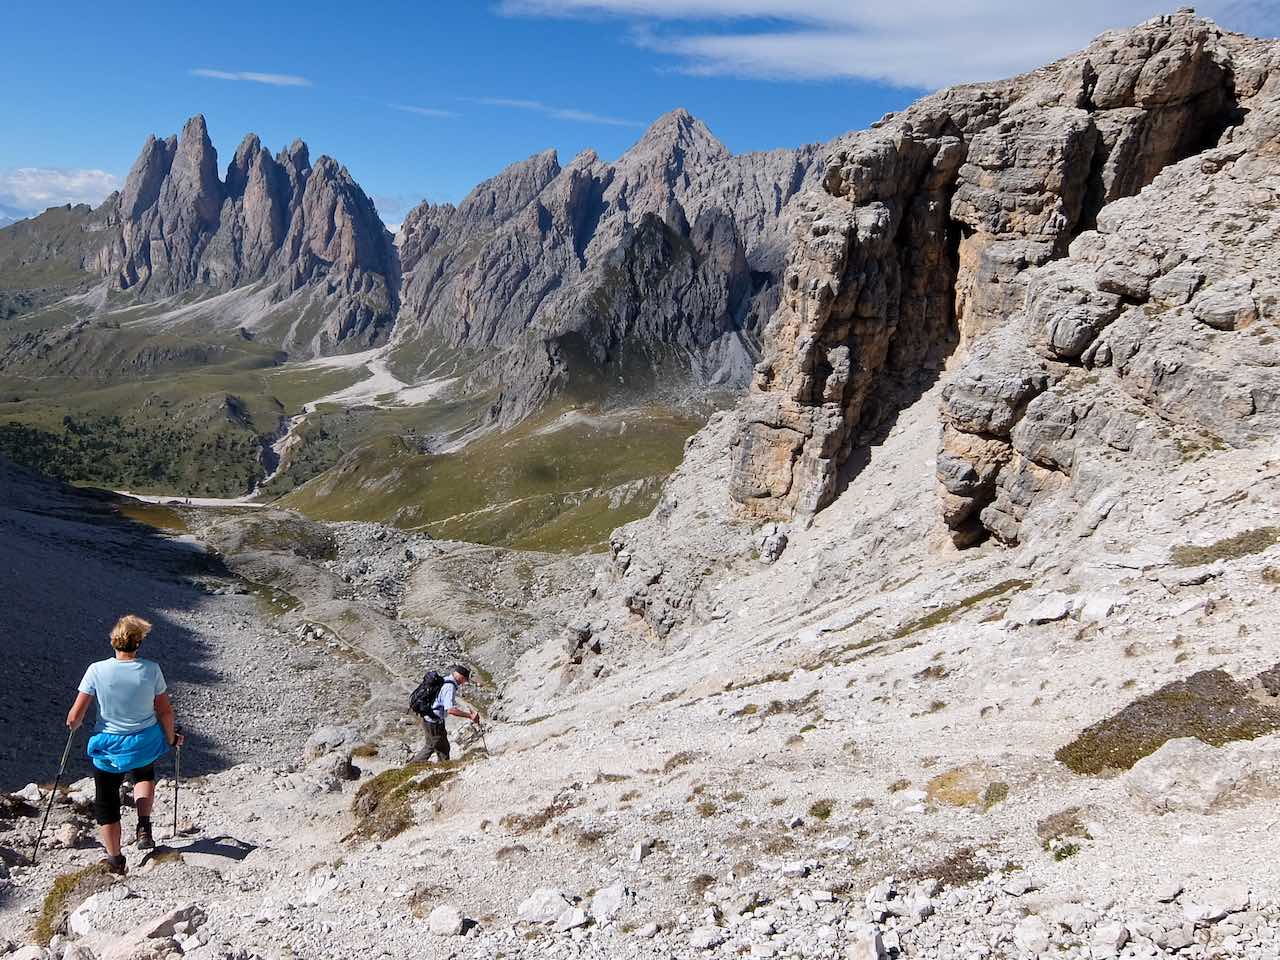 Val Gardena trekking routes: The Crown of Gardena four day circular hike